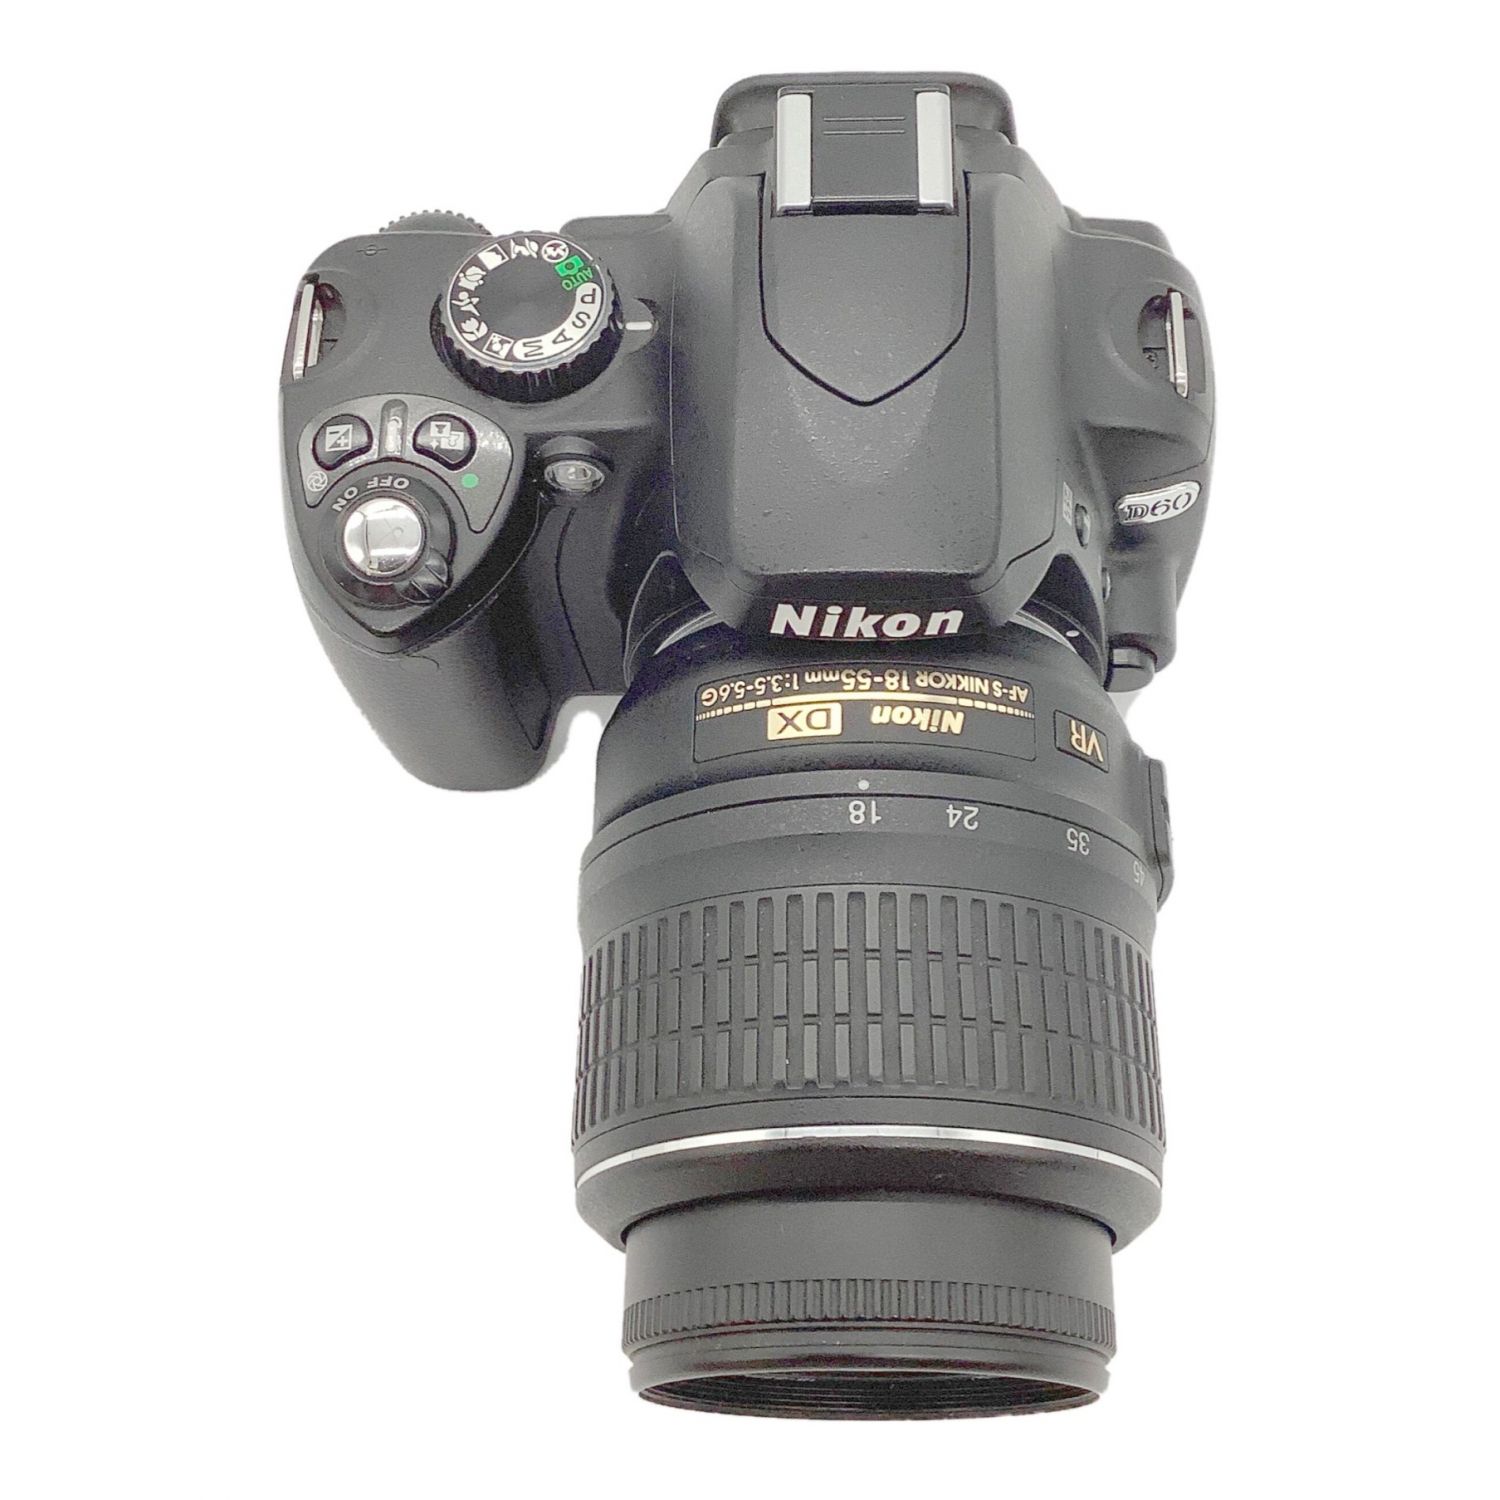 Nikon (ニコン) デジタル一眼レフカメラ AF-S DX NIKKOR 18-55mm f/3.5 